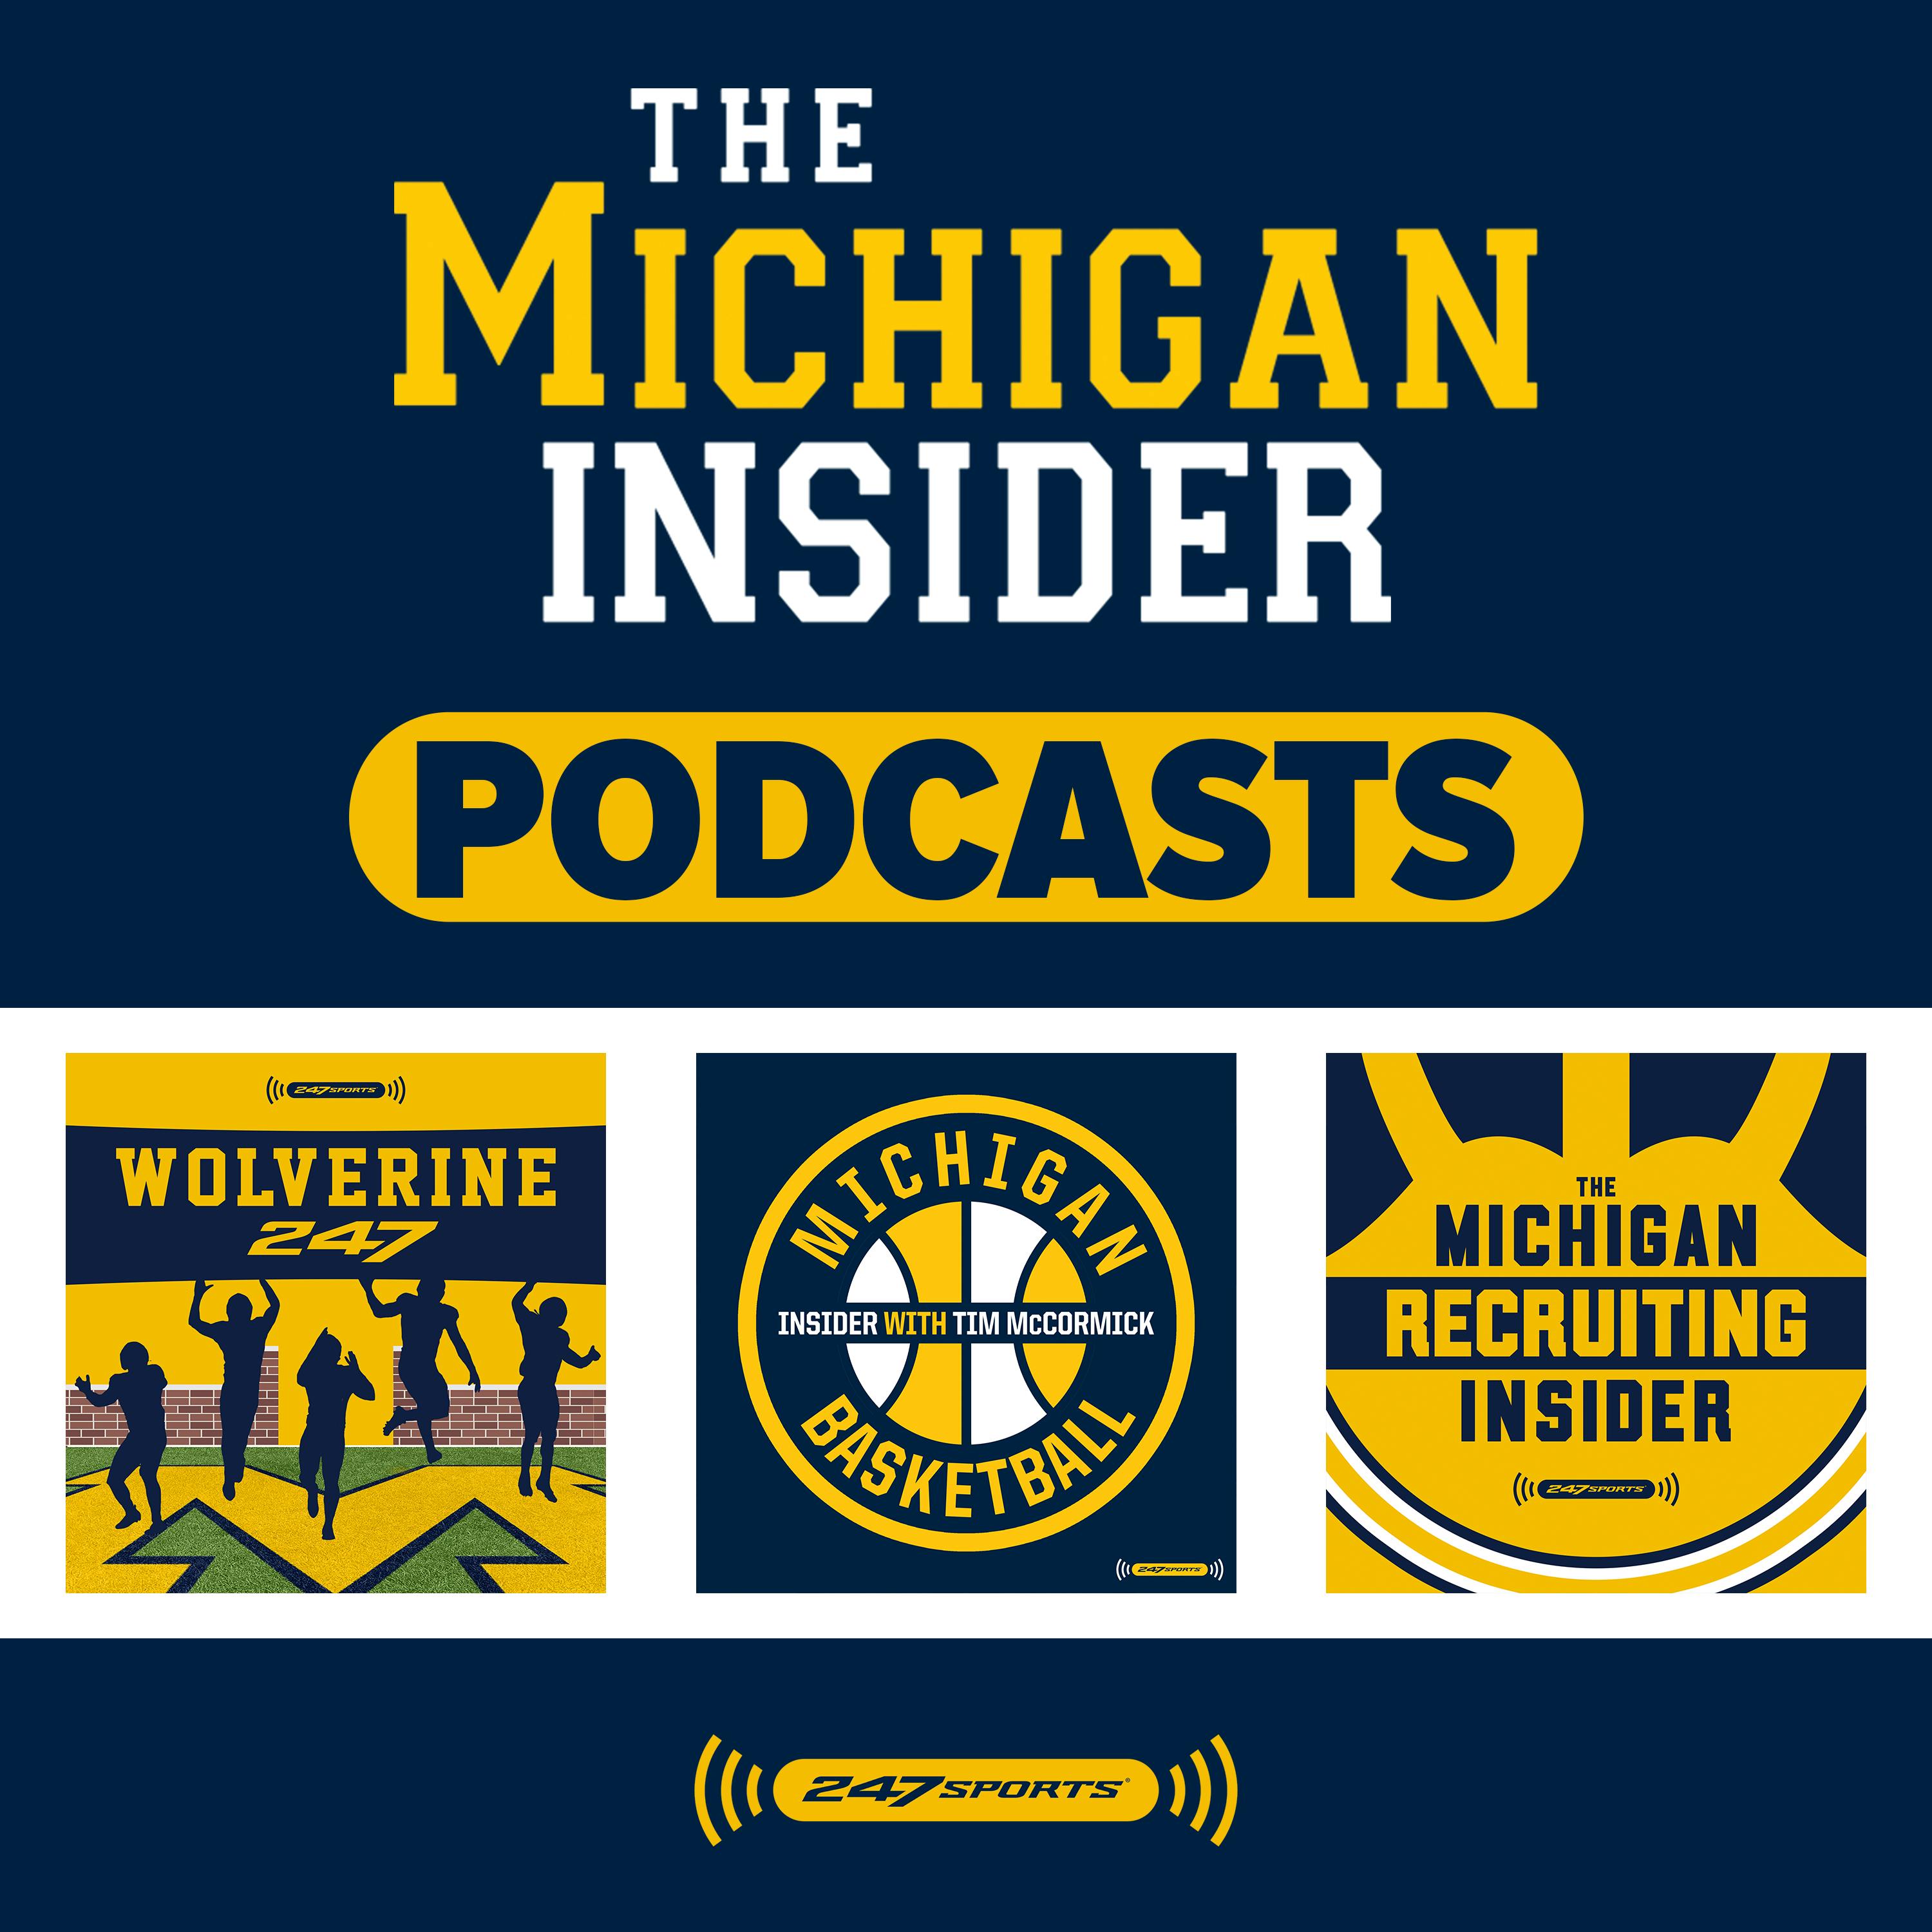 The Michigan Insider podcast